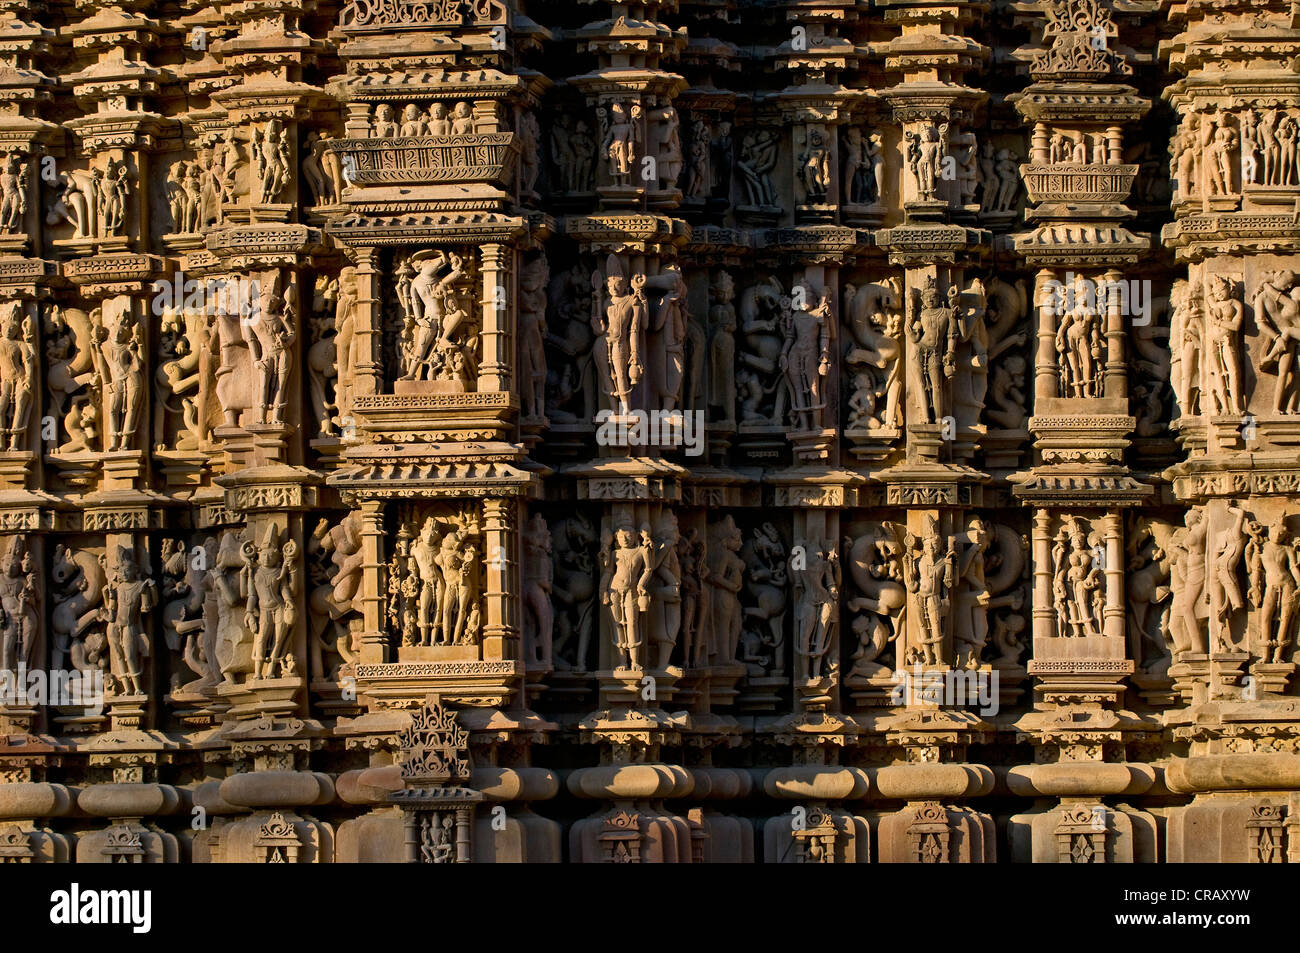 Kandariya Mahadev Temple, Khajuraho Group of Monuments, UNESCO World Heritage Site, Madhya Pradesh, Inde, Asie Banque D'Images